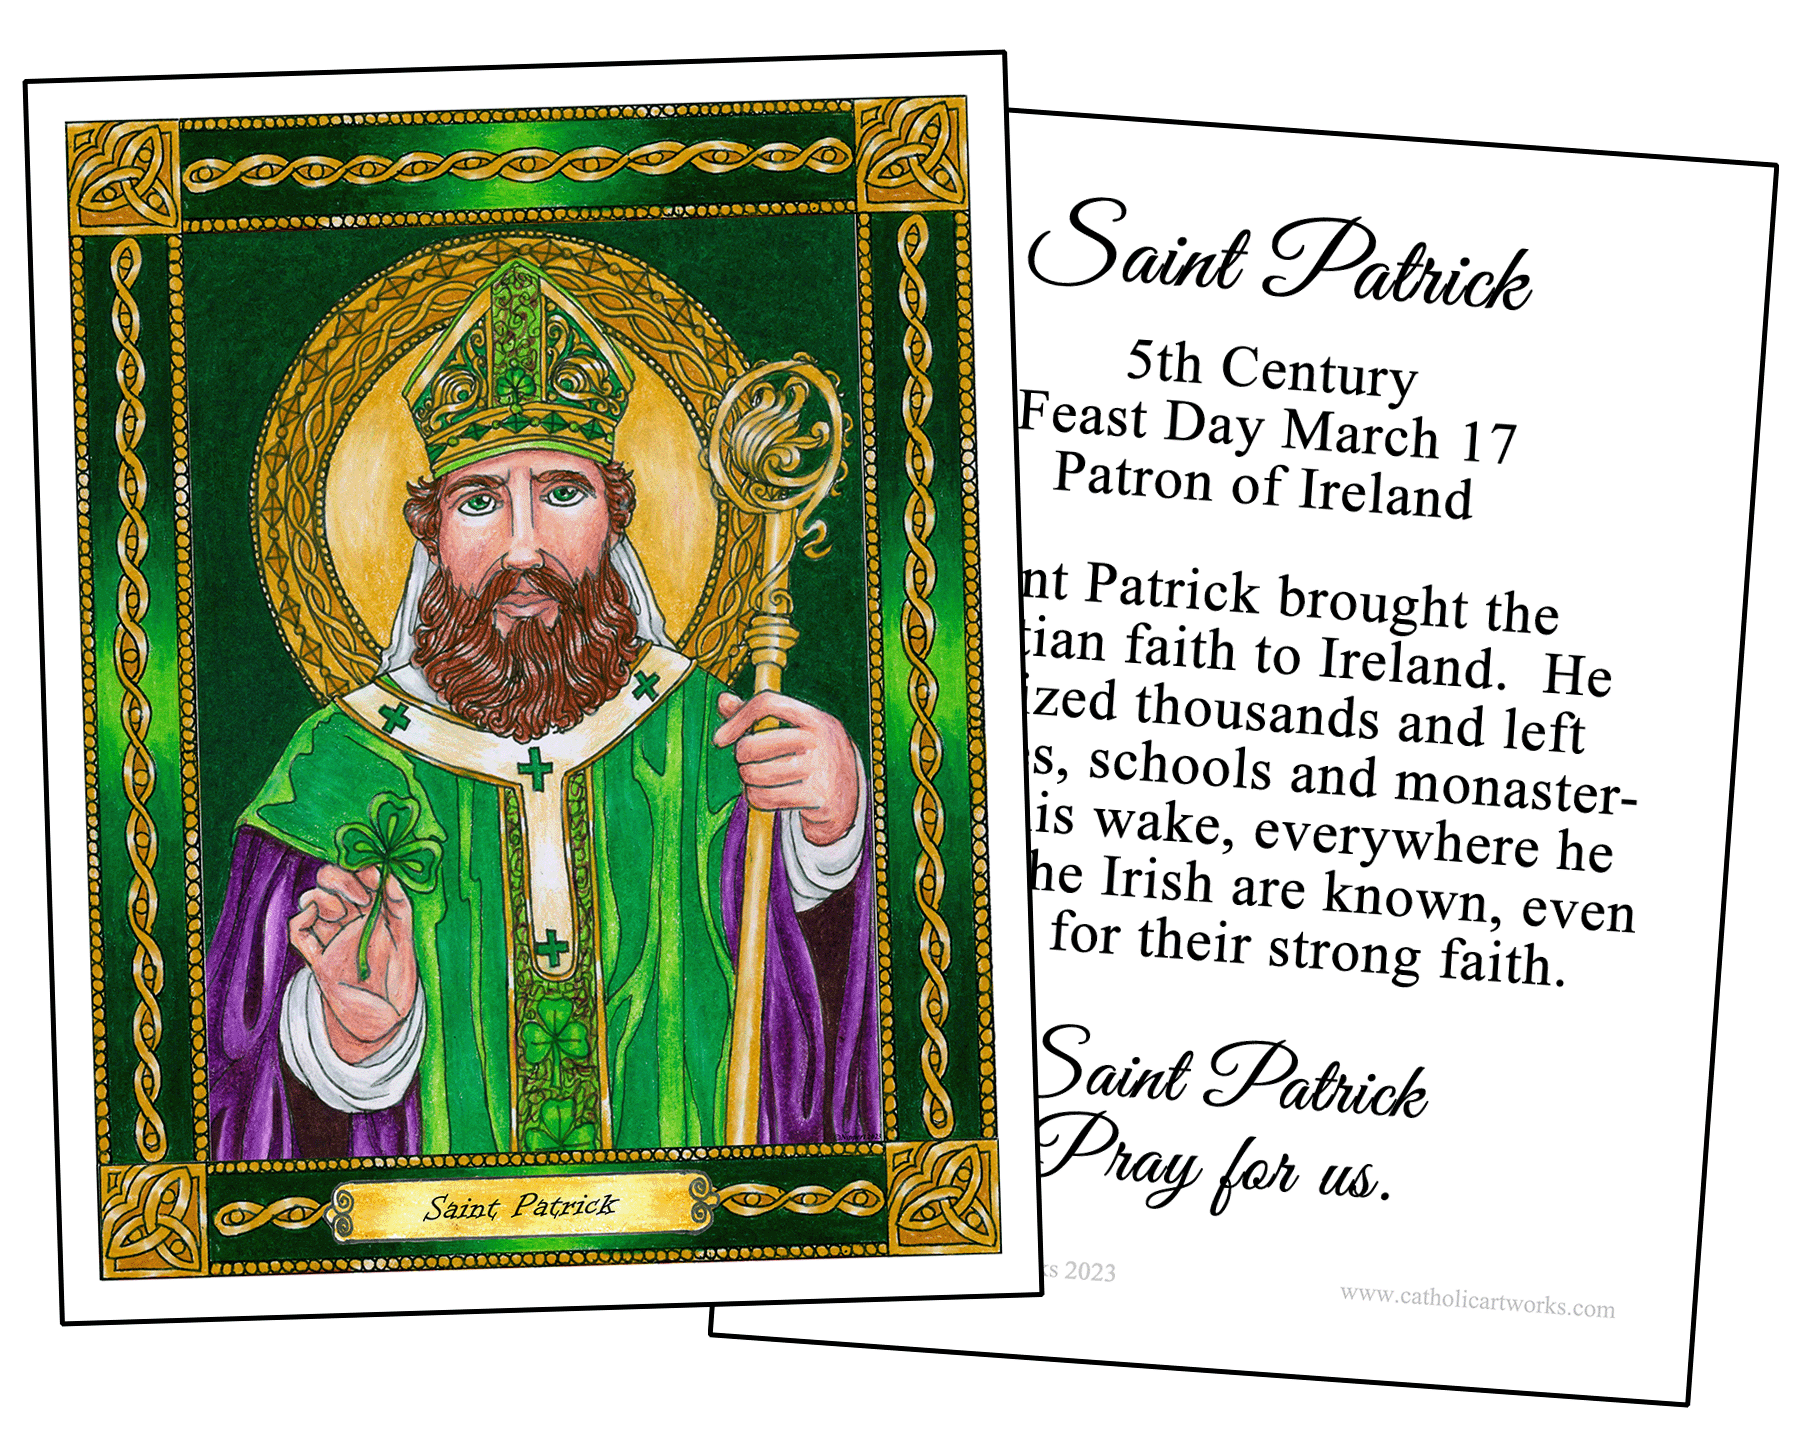 Saint Joseph Large Holy Cards